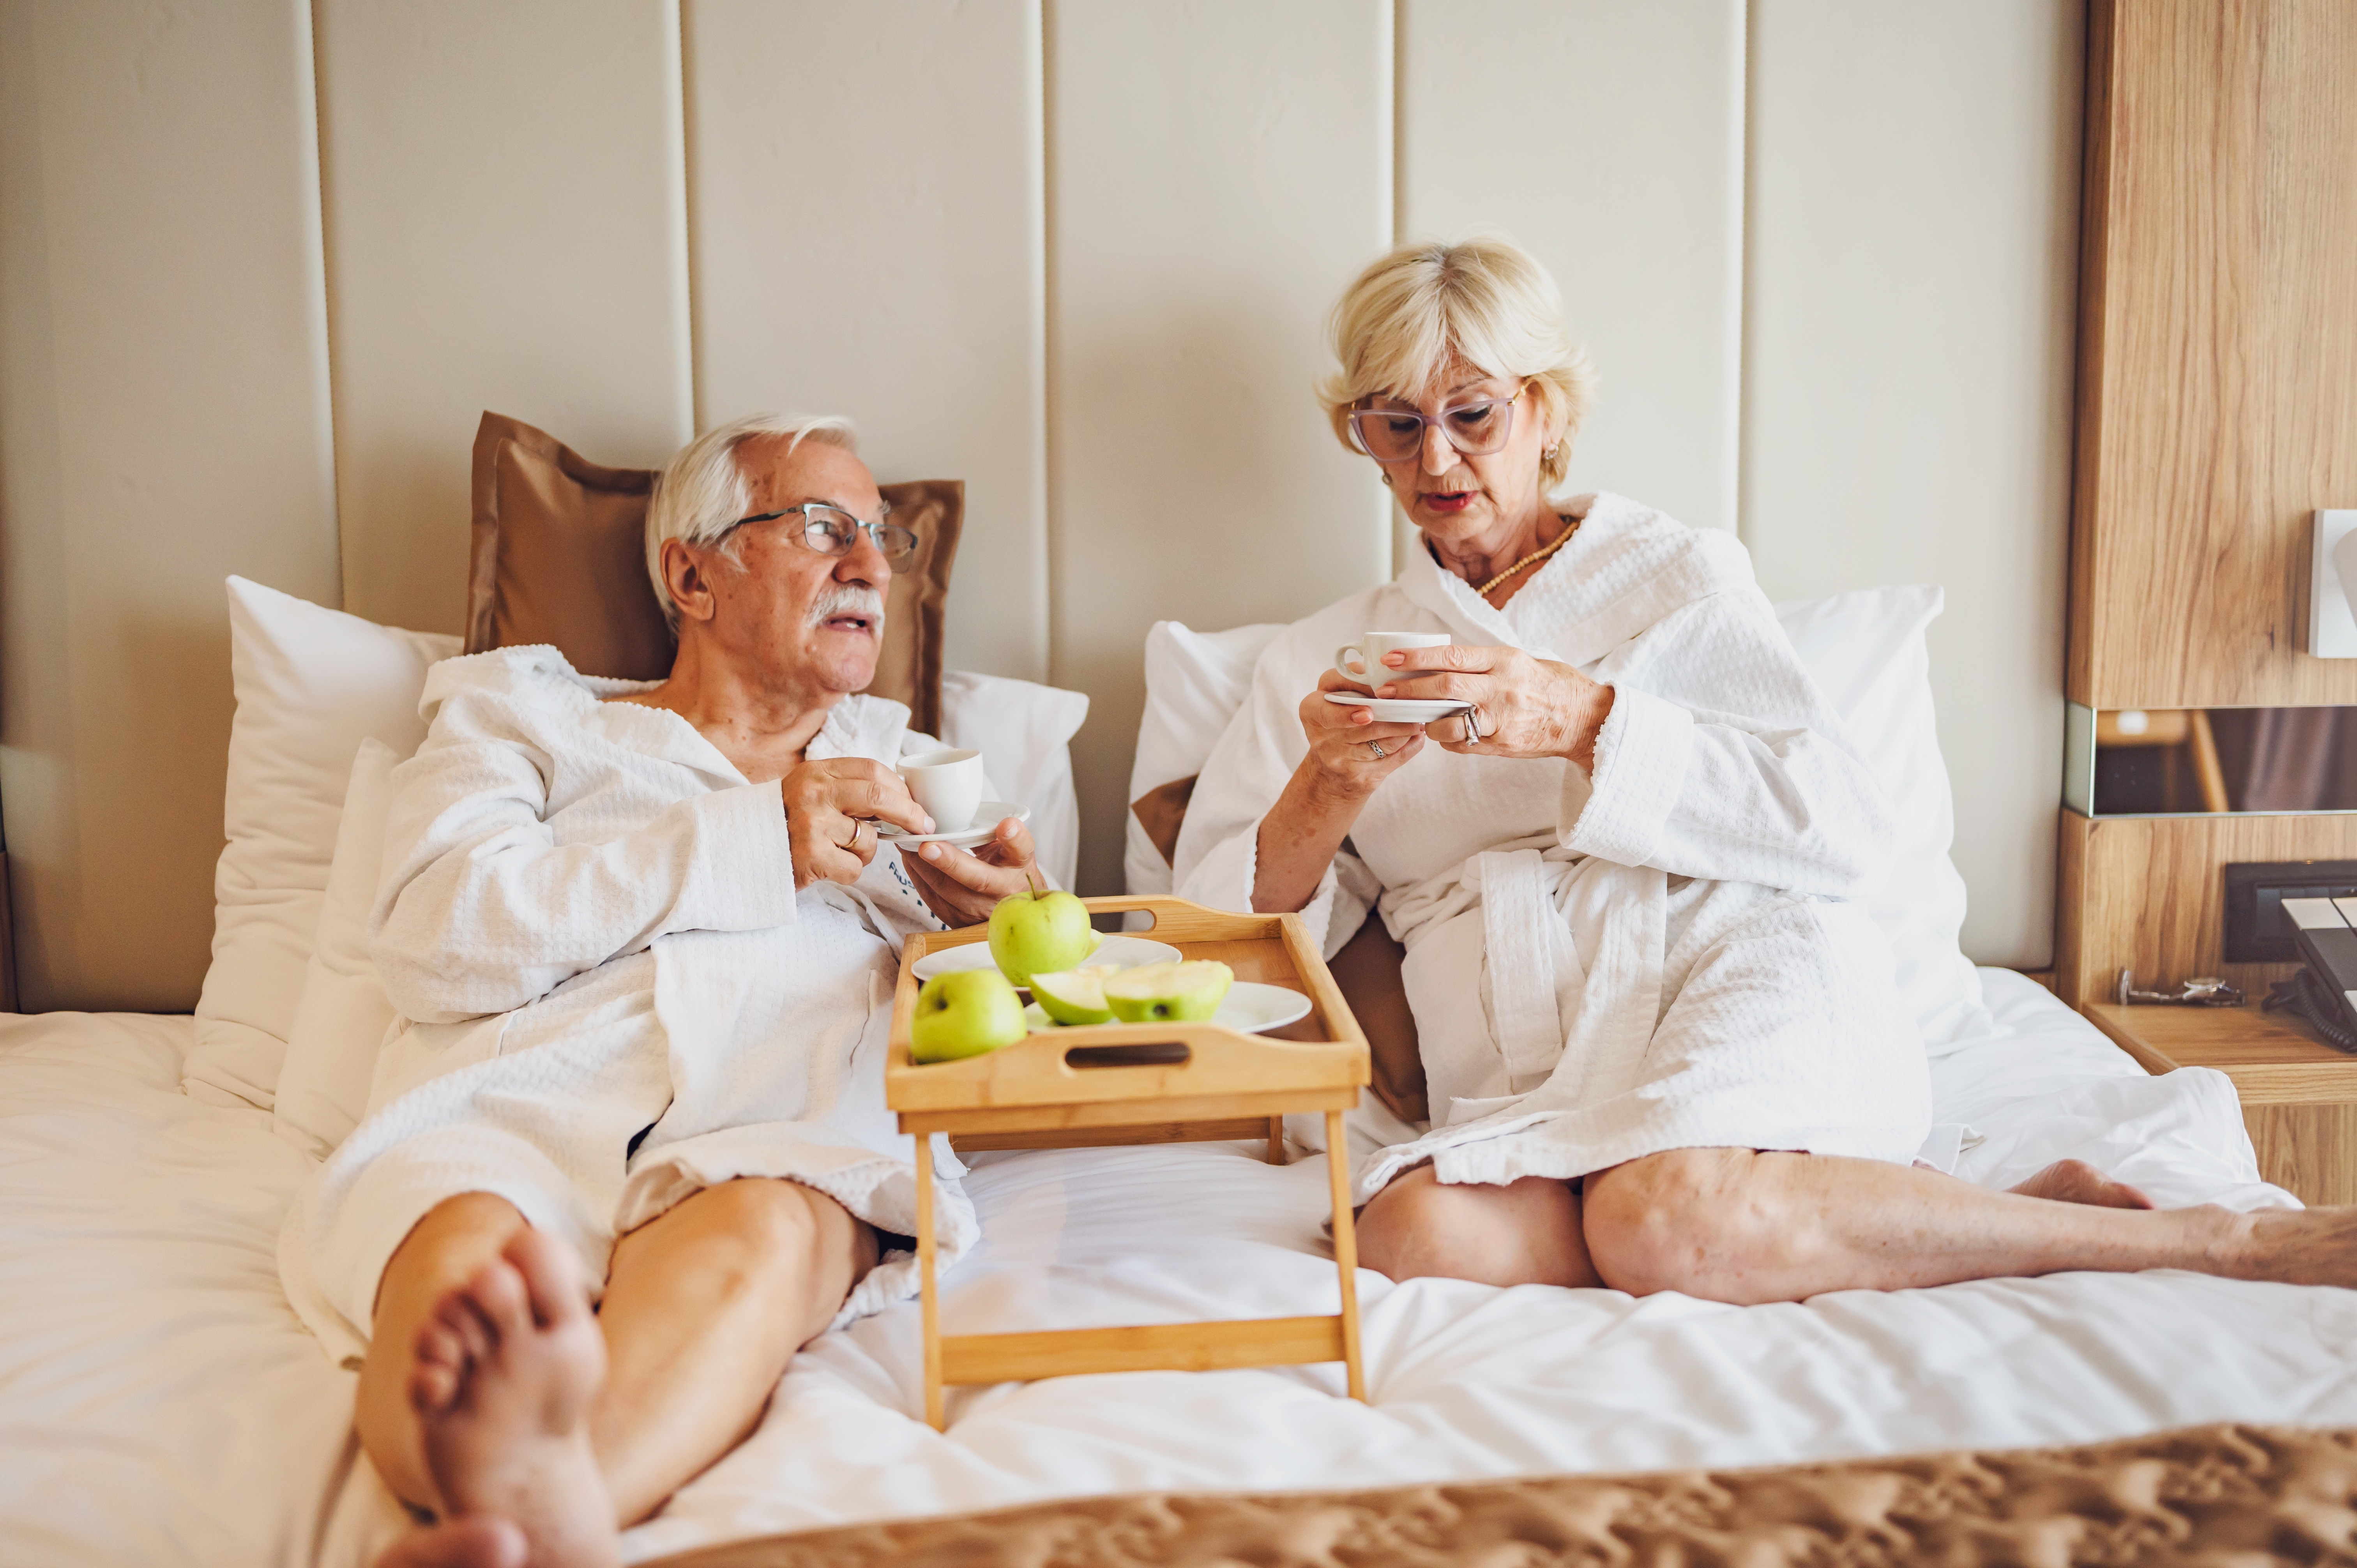 An elderly couple drinking coffee in a hotel room | Source: Shutterstock